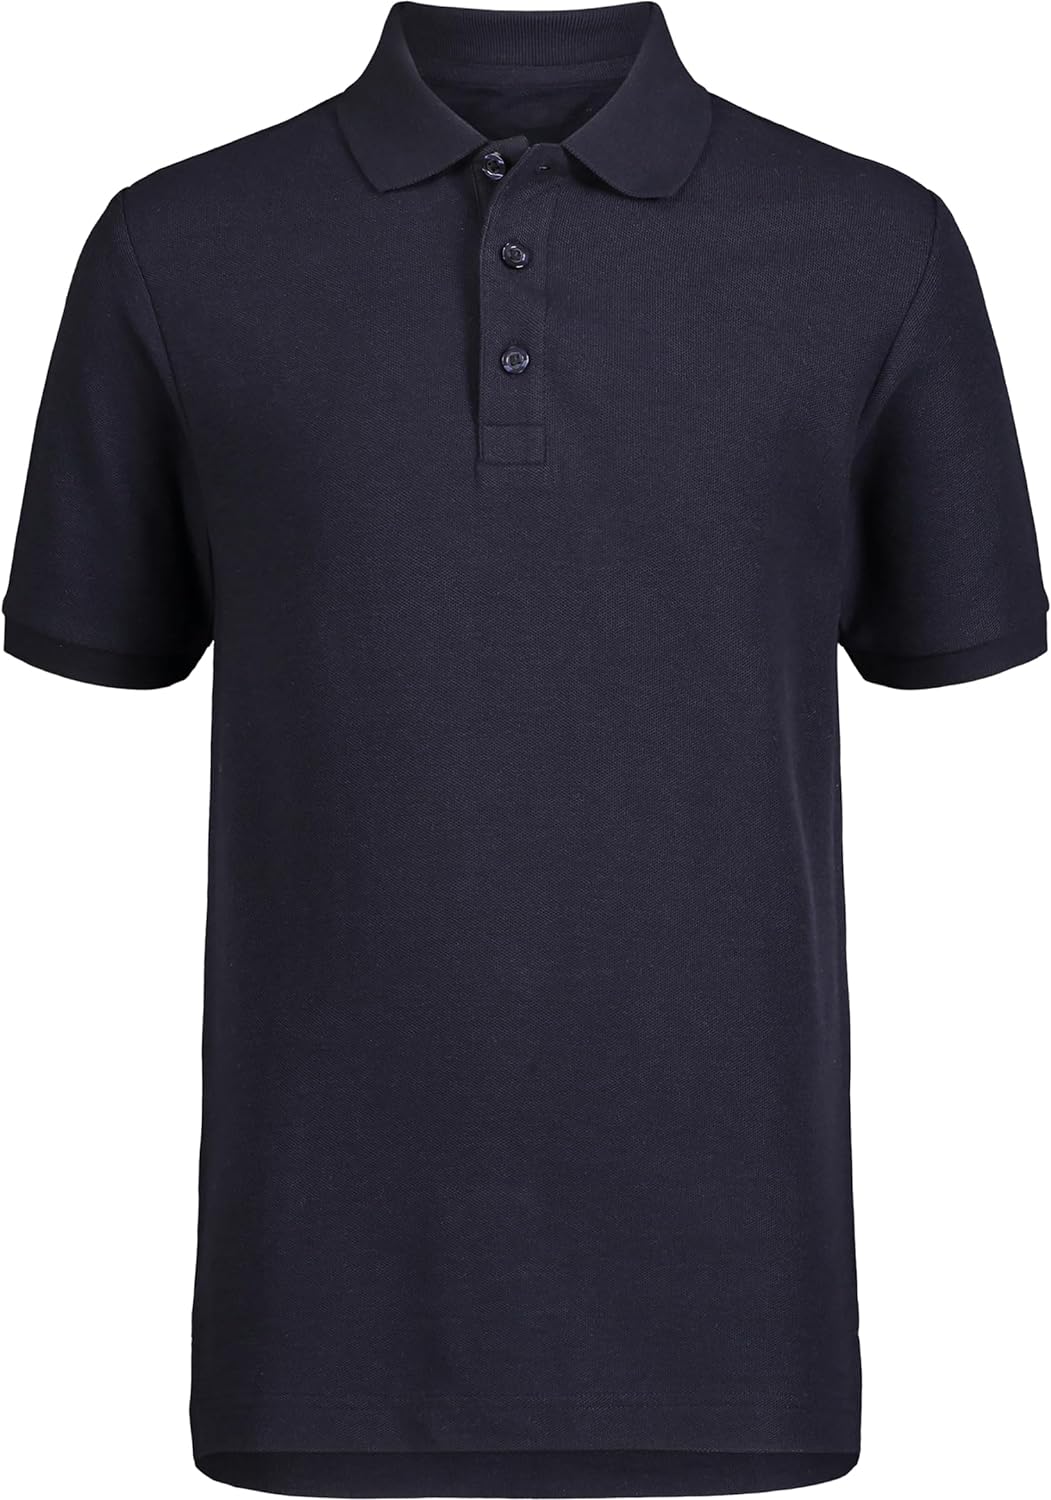 IZOD Boys' School Uniform Adaptive Short Sleeve Polo Shirt, Velcro Closure & Faux Buttons, Comfortable Pique Fabric